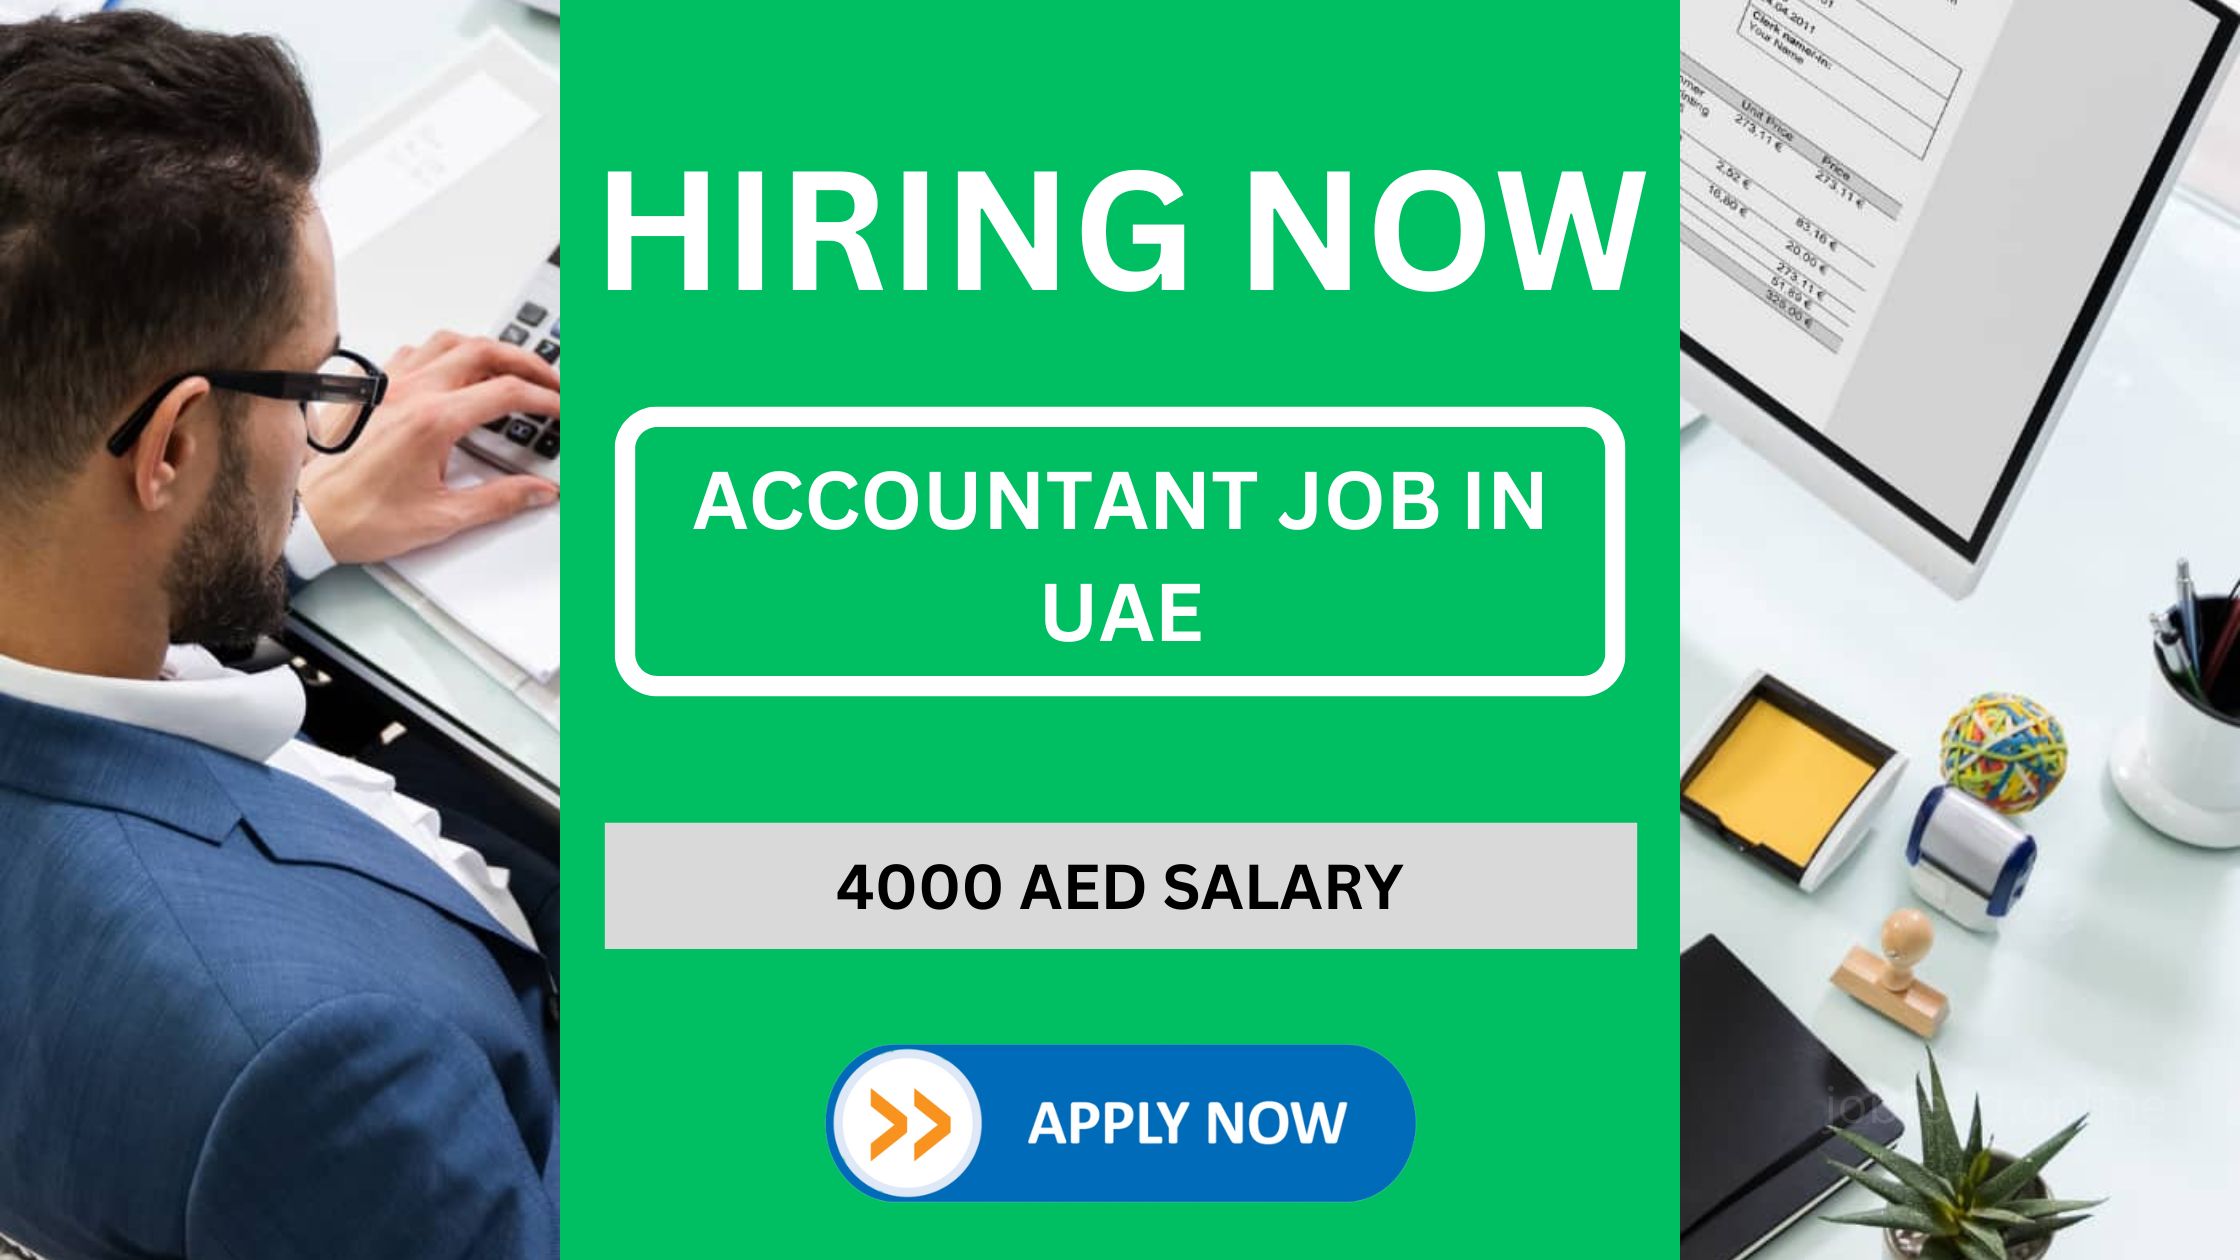 Accountant Vacancy with Salary 4000 Dirhams